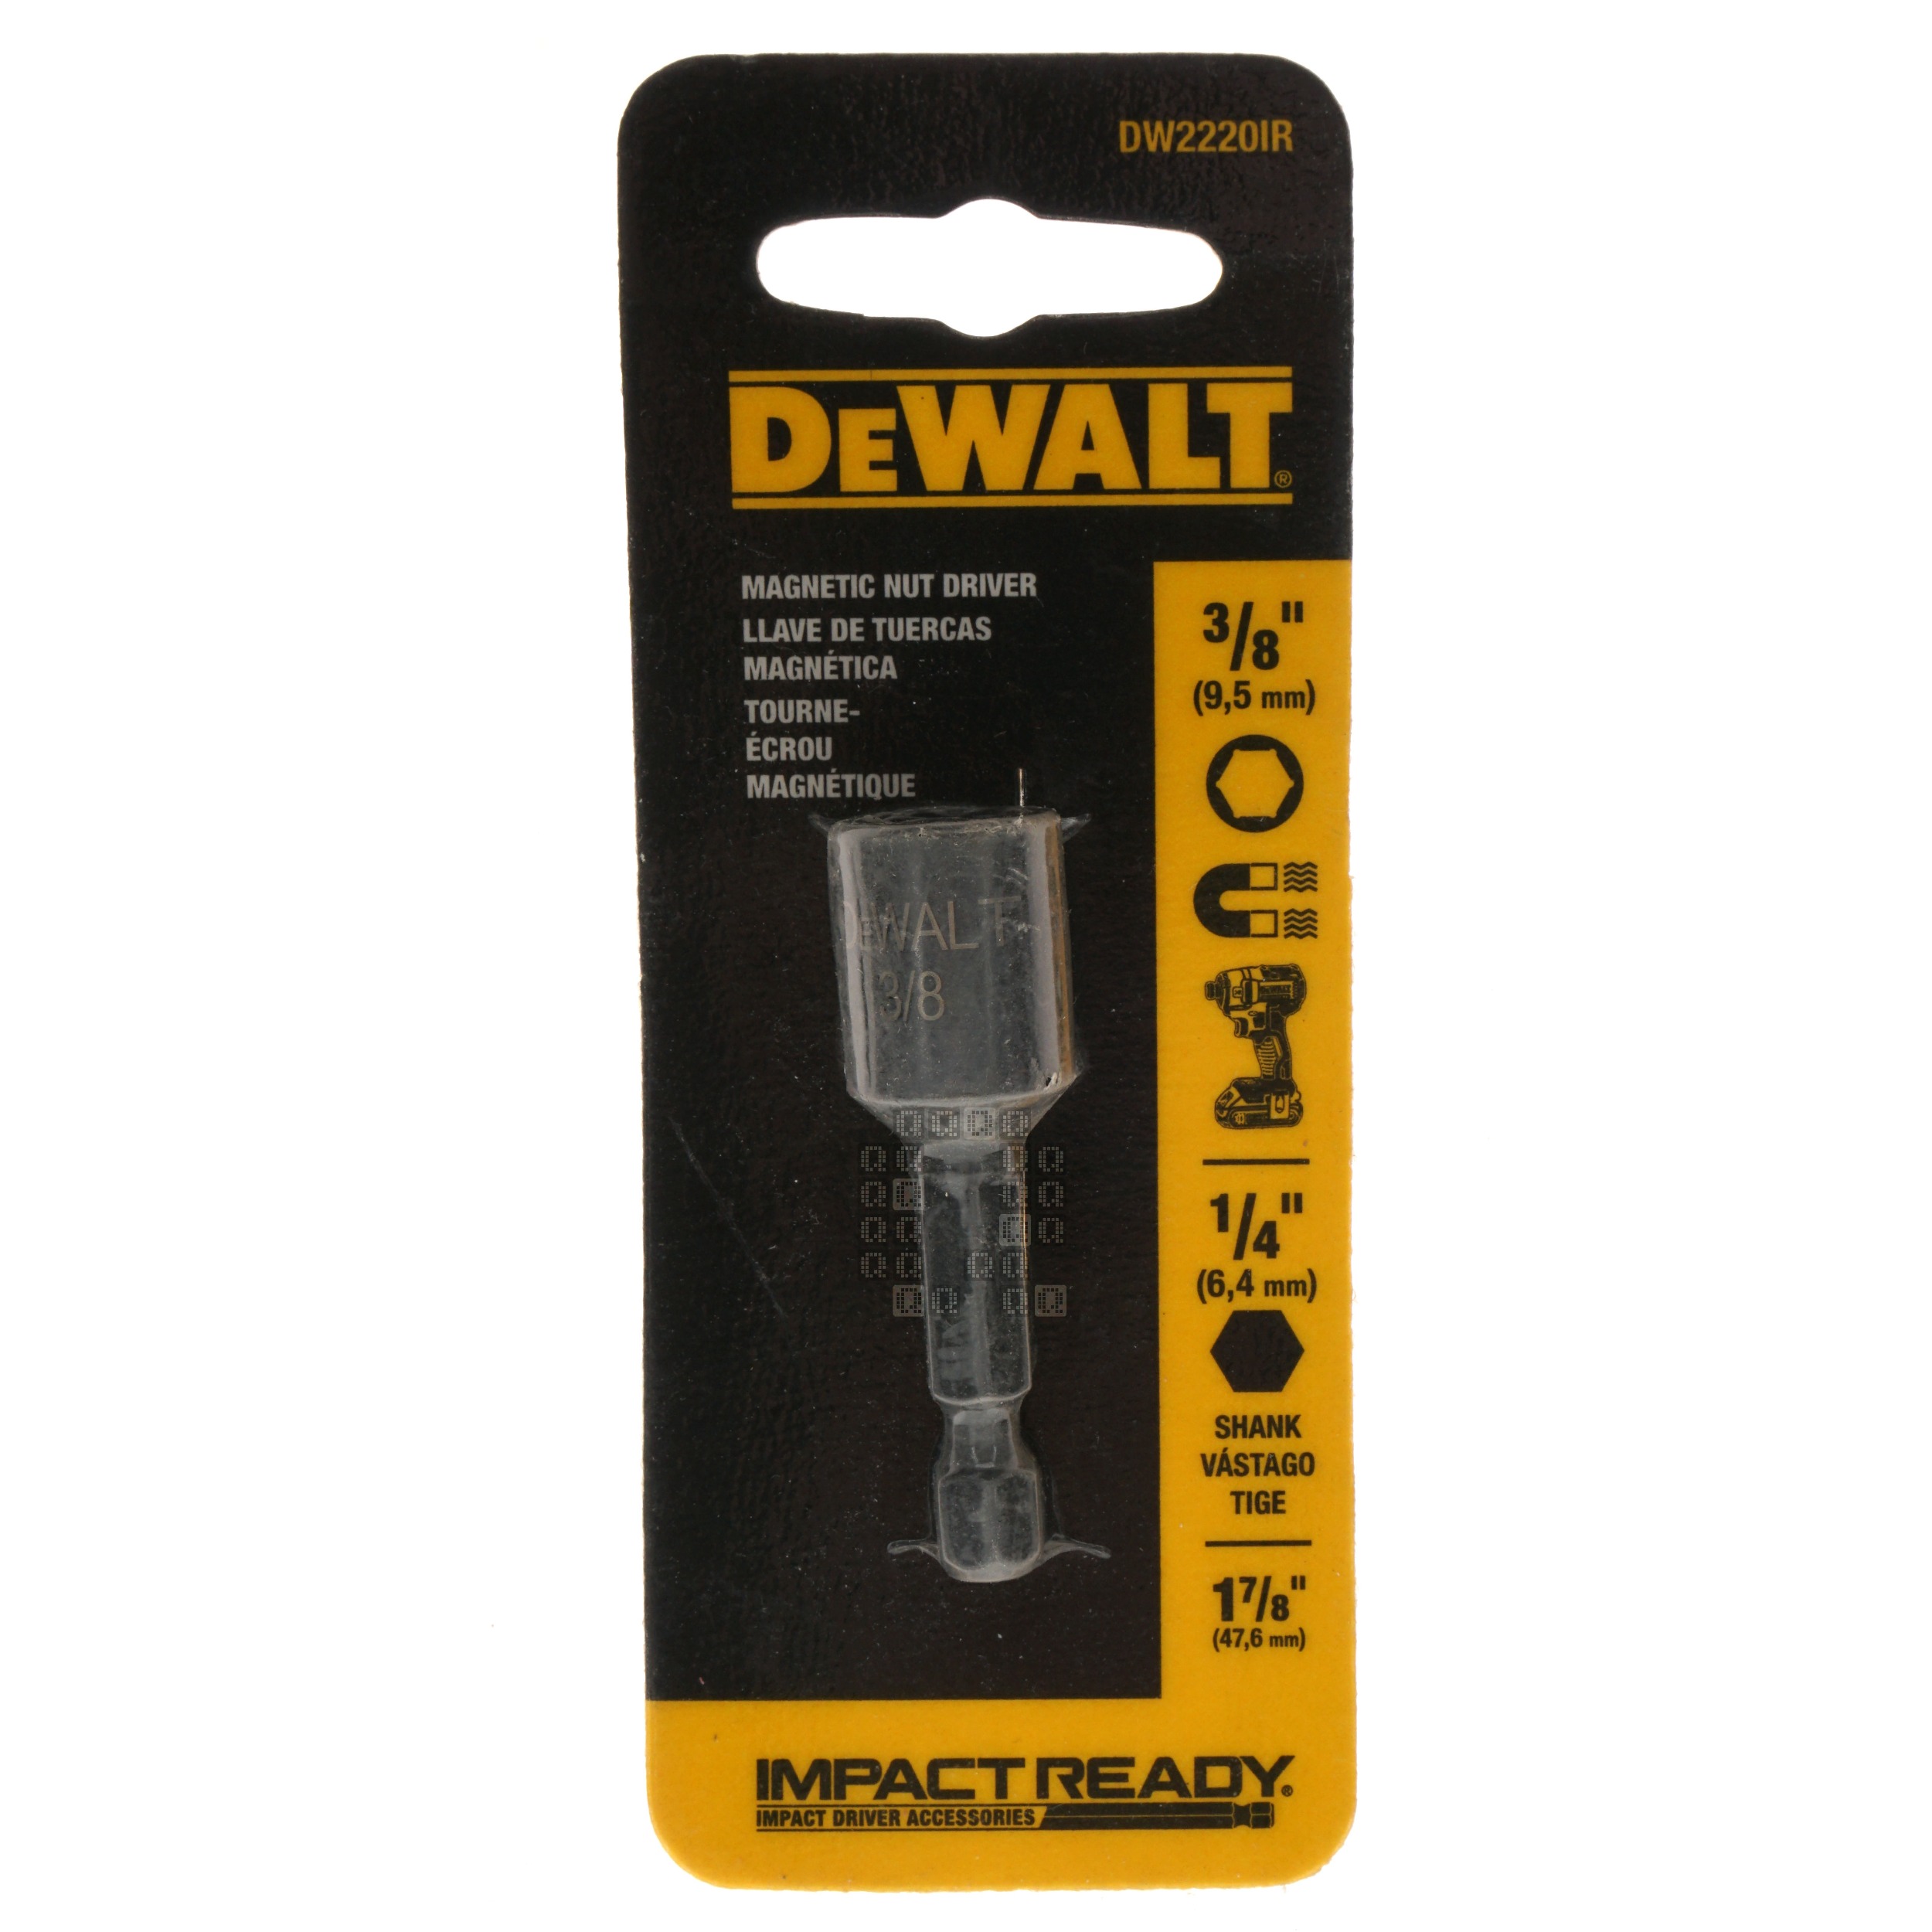 DeWALT DW2220IR Impact Ready 3/8" Magnetic Nut Driver, 1-7/8" Length